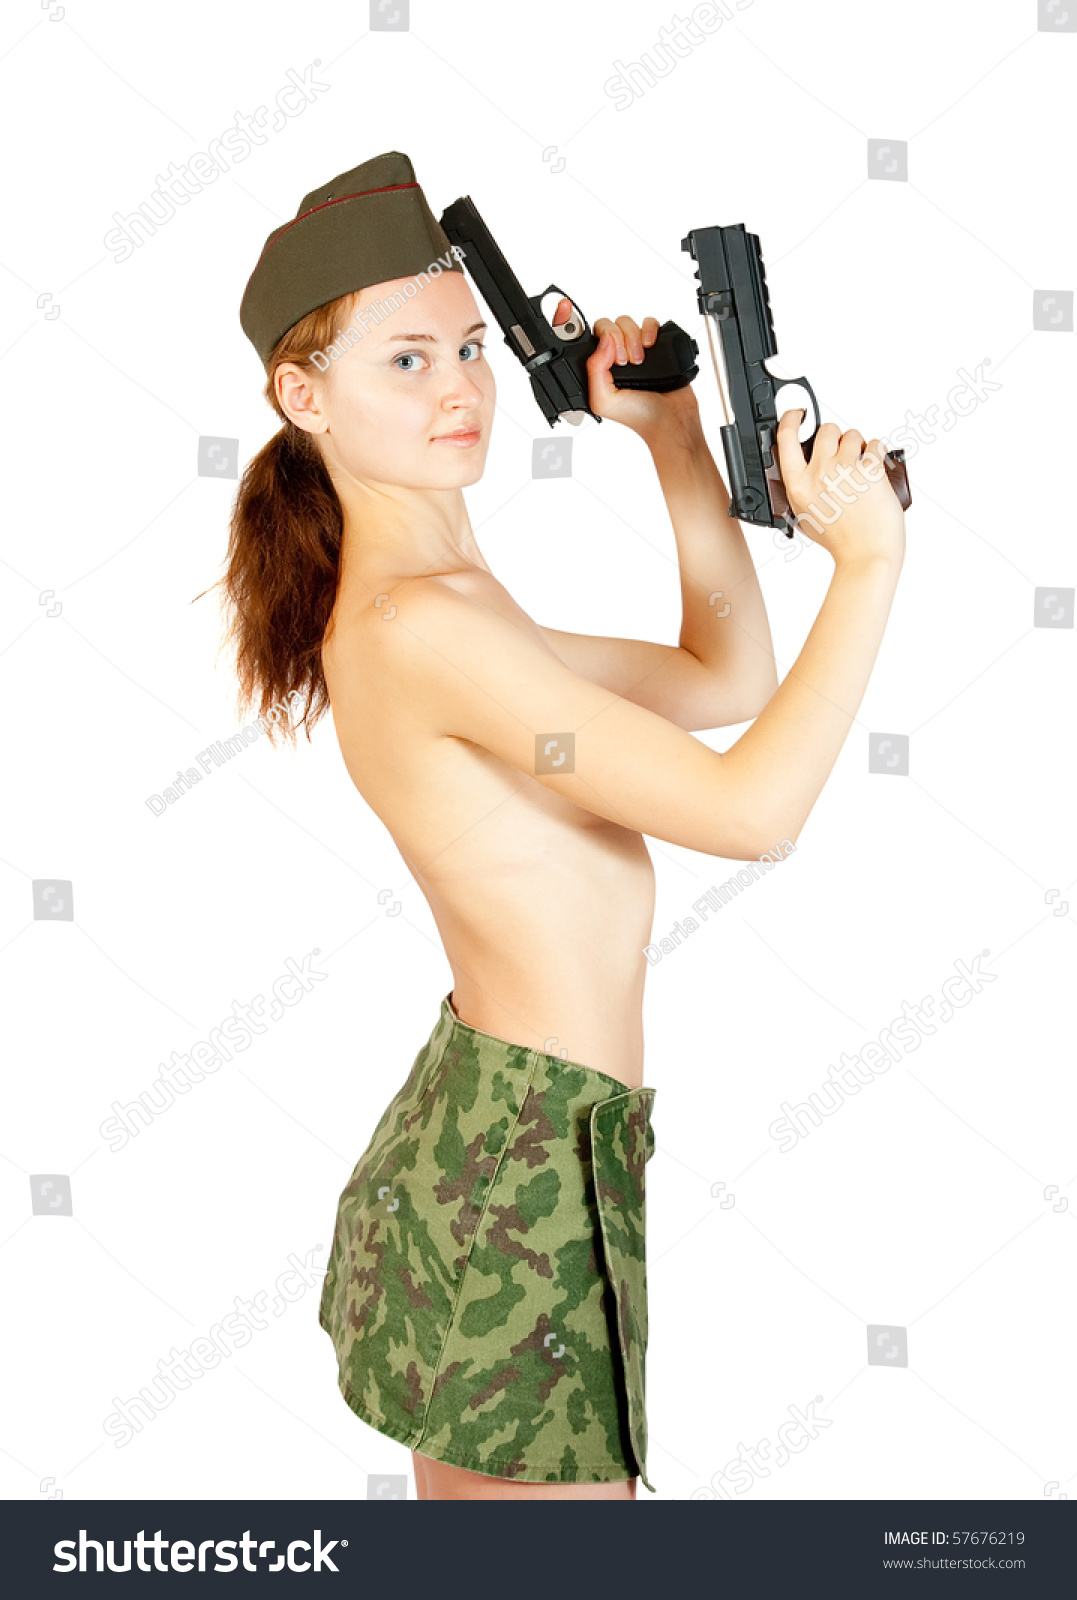 guns and girls topless